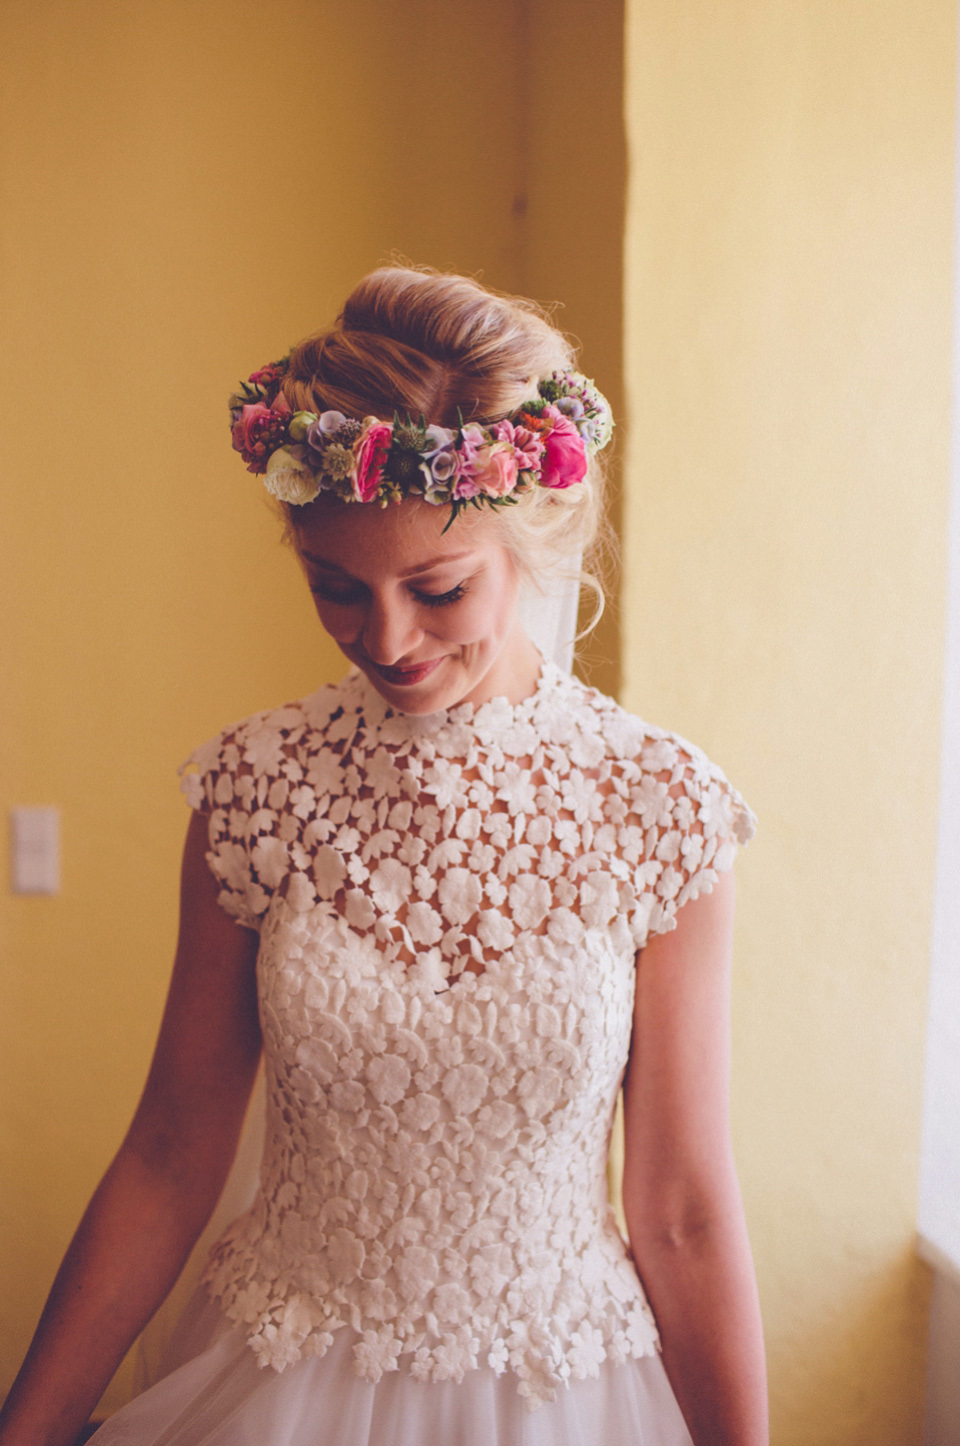 Effortless Elegance - A Raimon Bundó Bride and Colourful Floral Crown. Photography by Chris Spira.